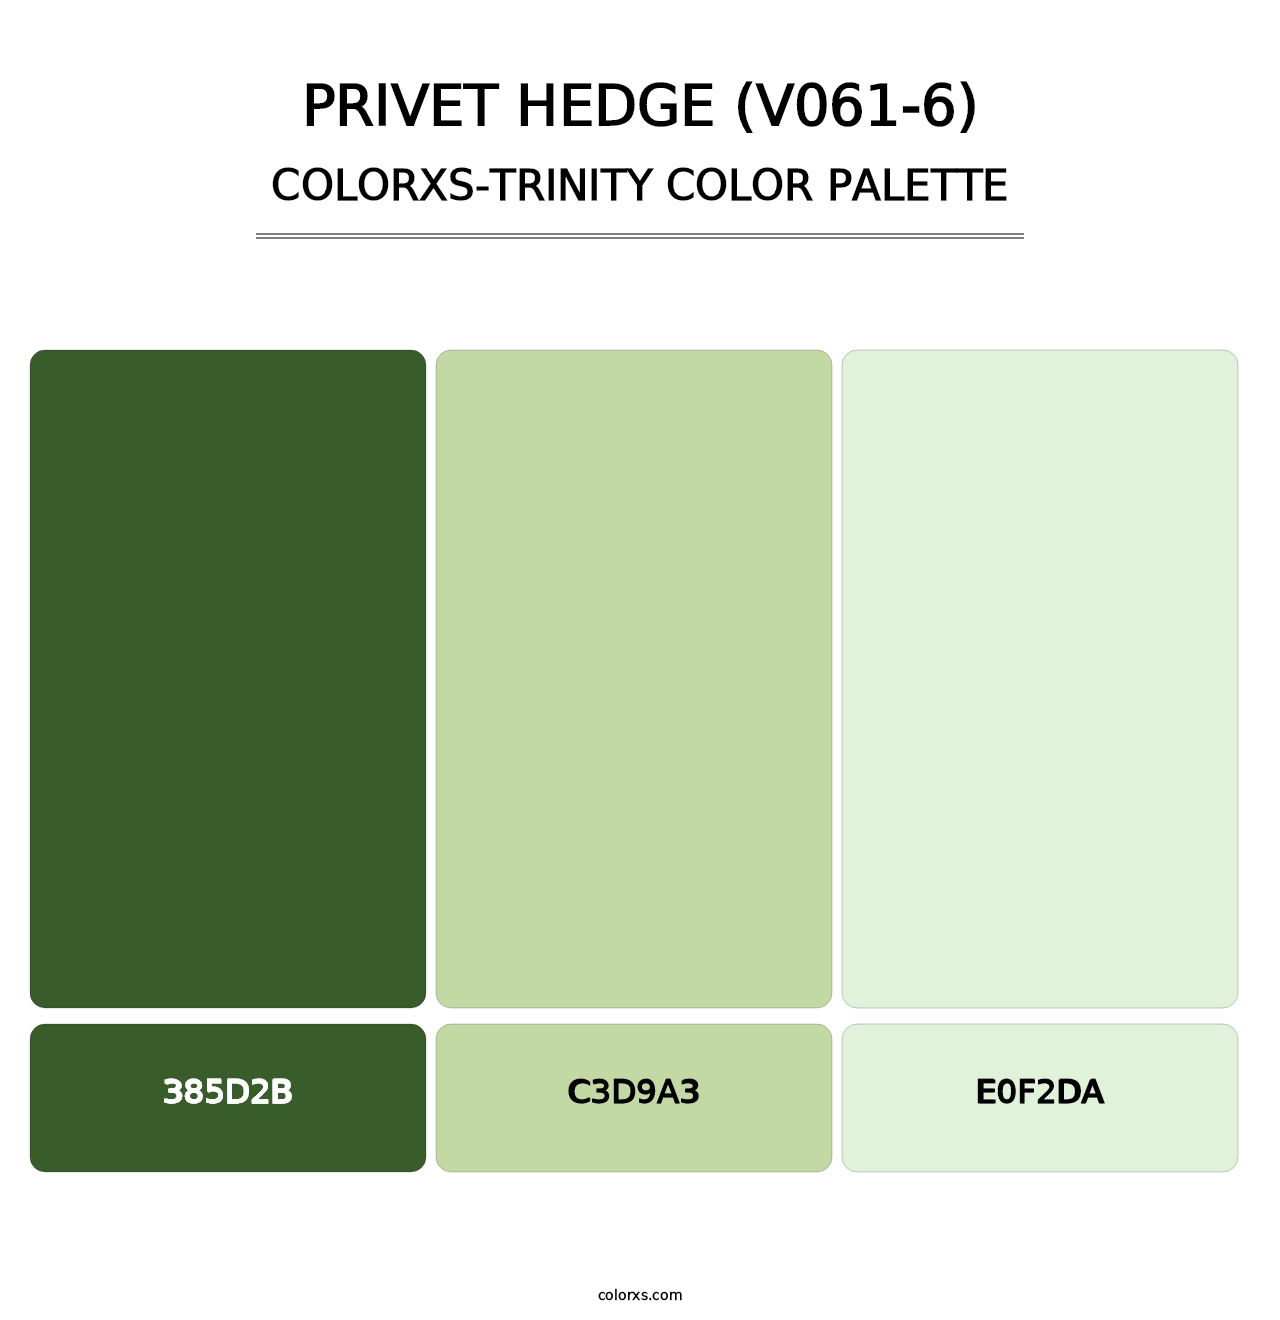 Privet Hedge (V061-6) - Colorxs Trinity Palette